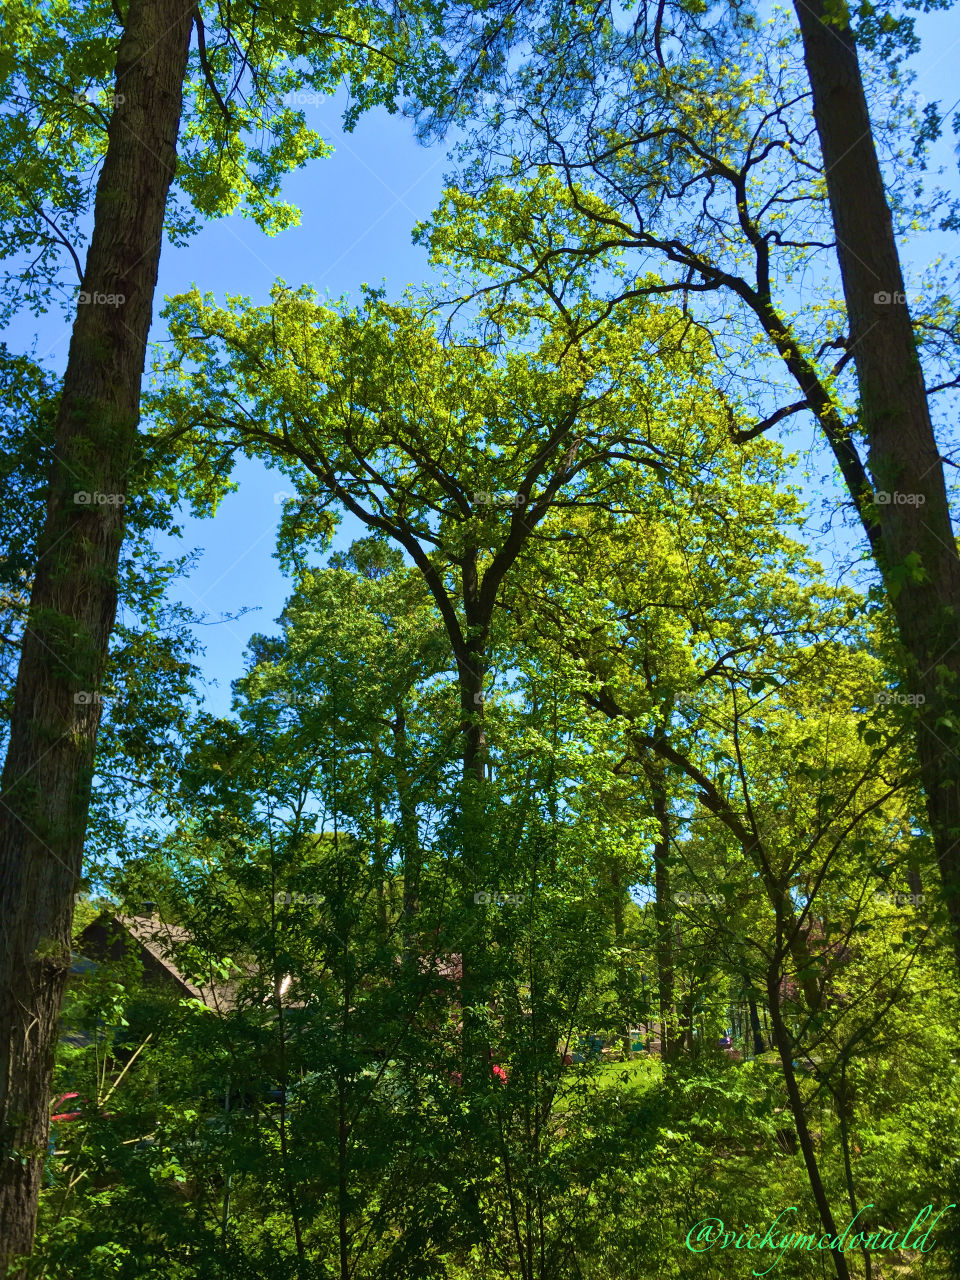 Treetops against a blue sky 